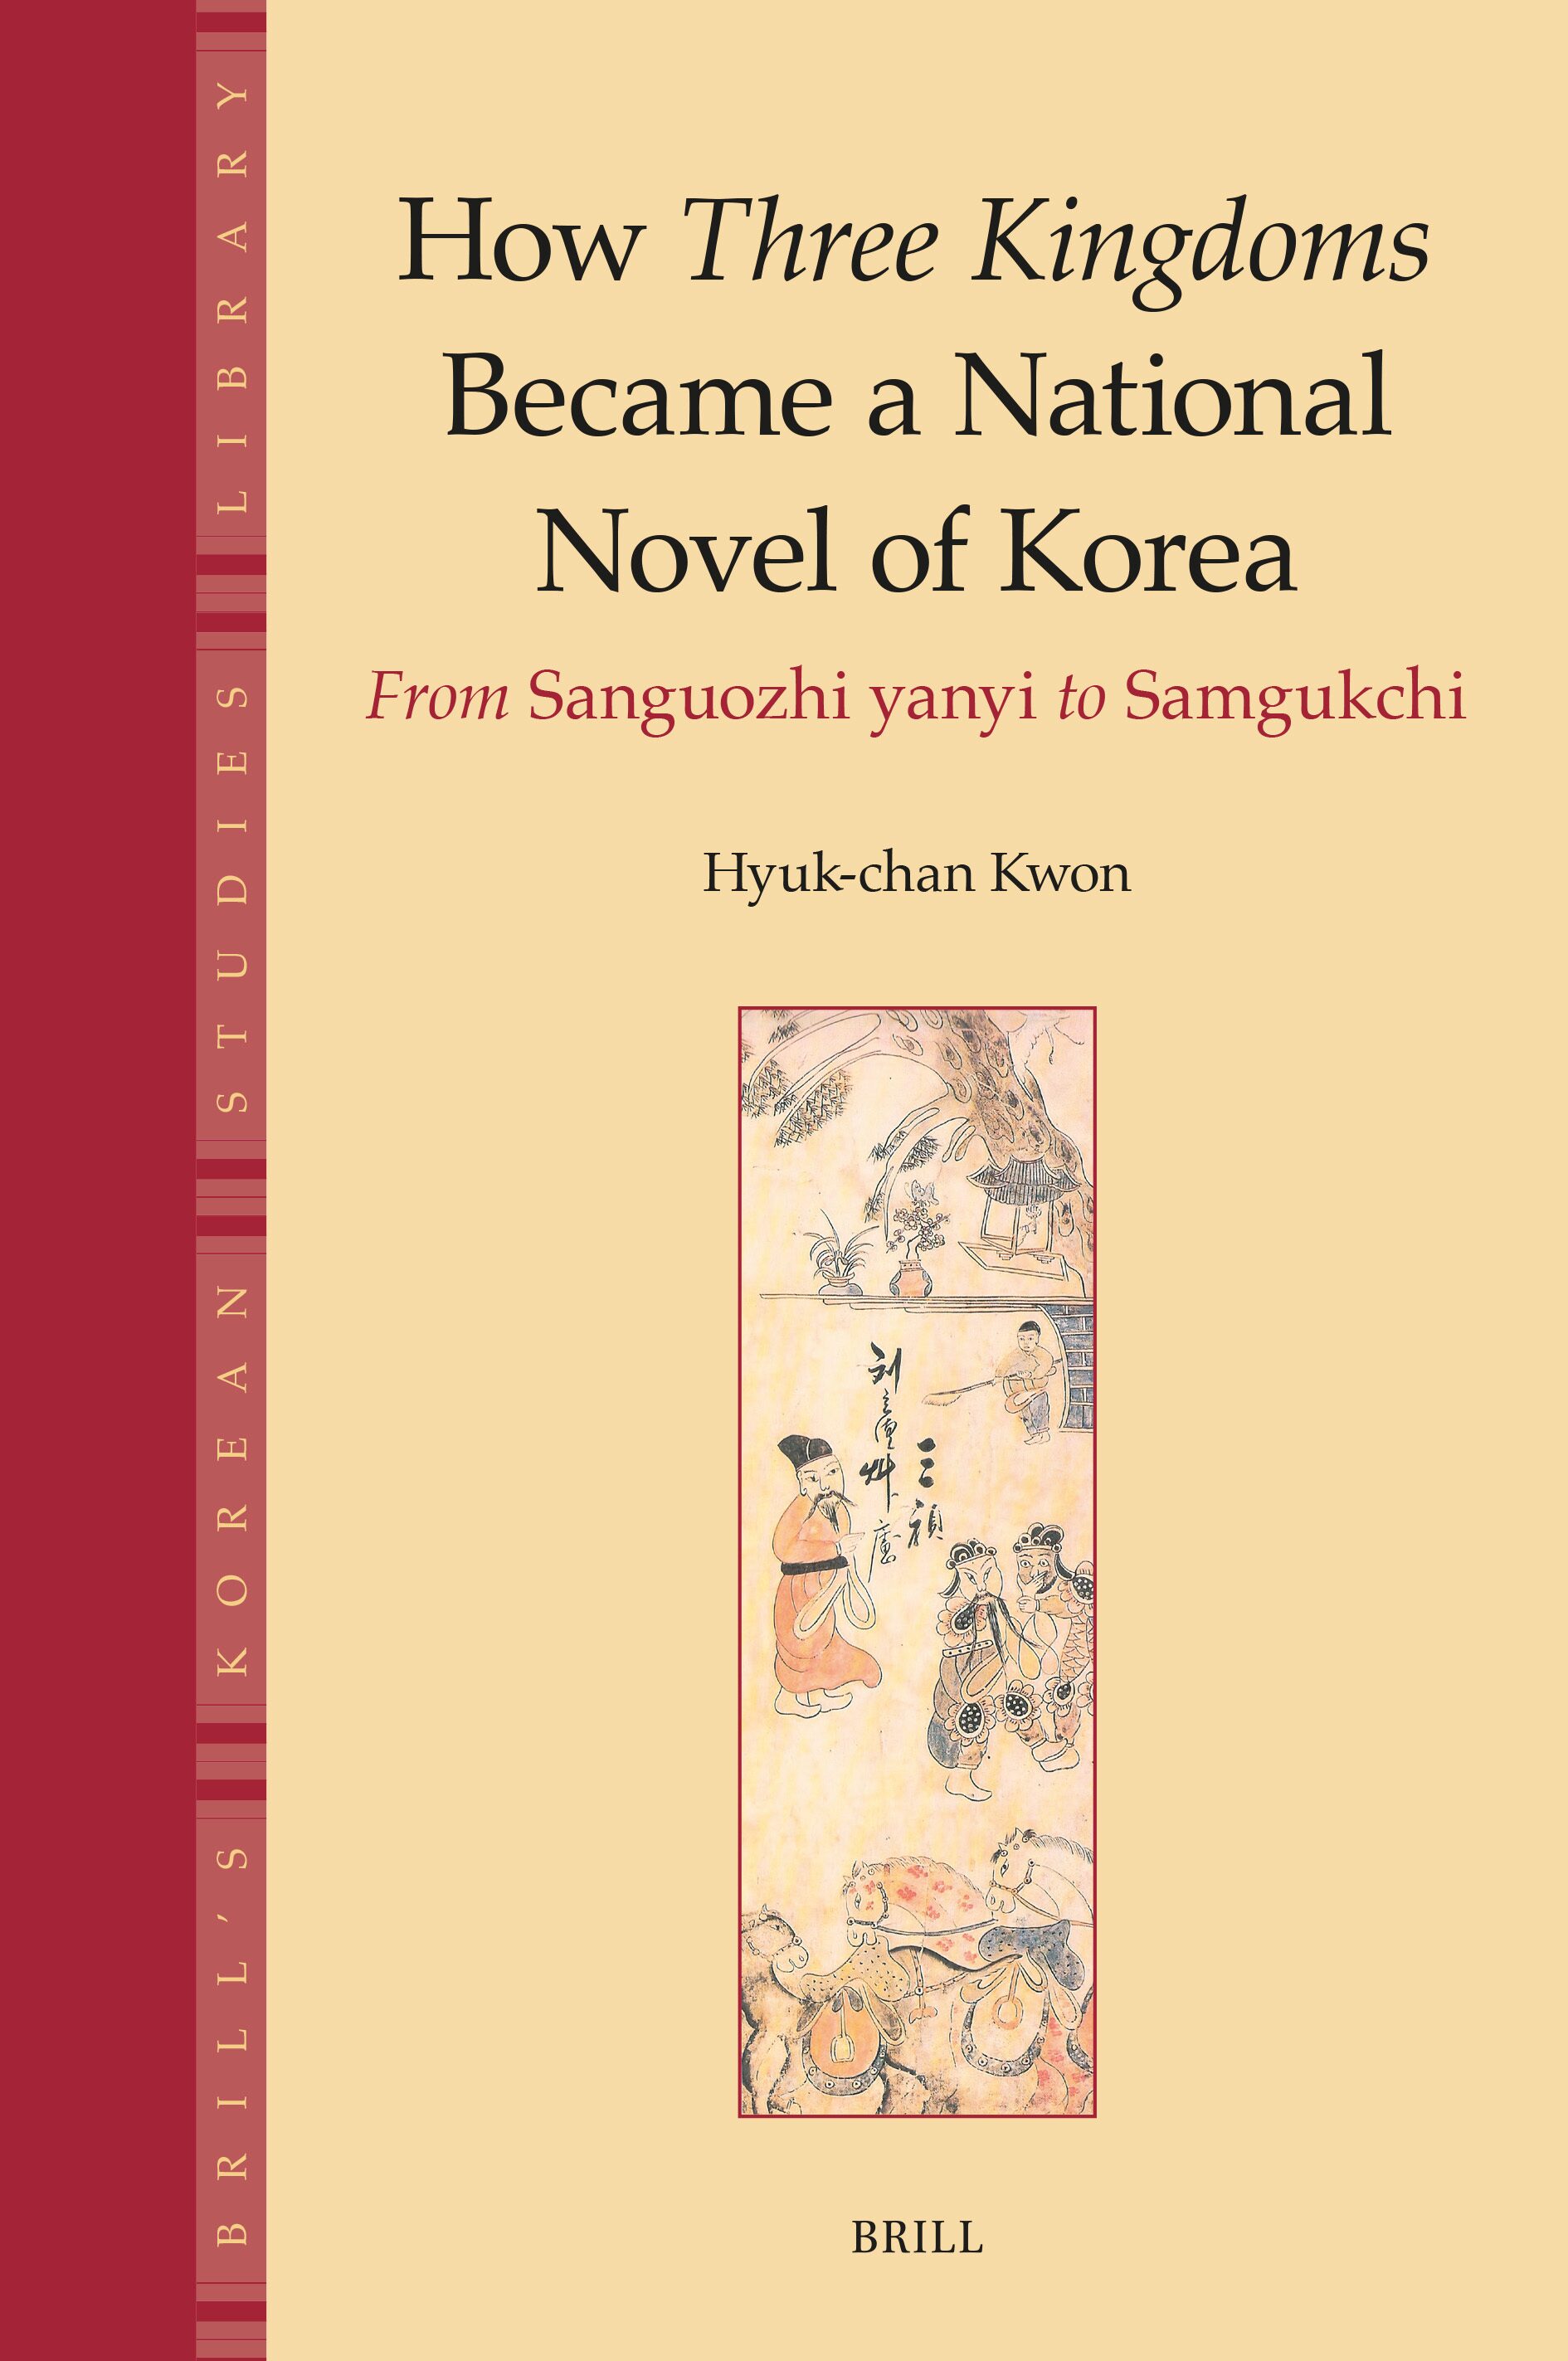 kwon-hyuk-chan-how-three-kingdoms-became-a-national-novel-of-korea.jpeg